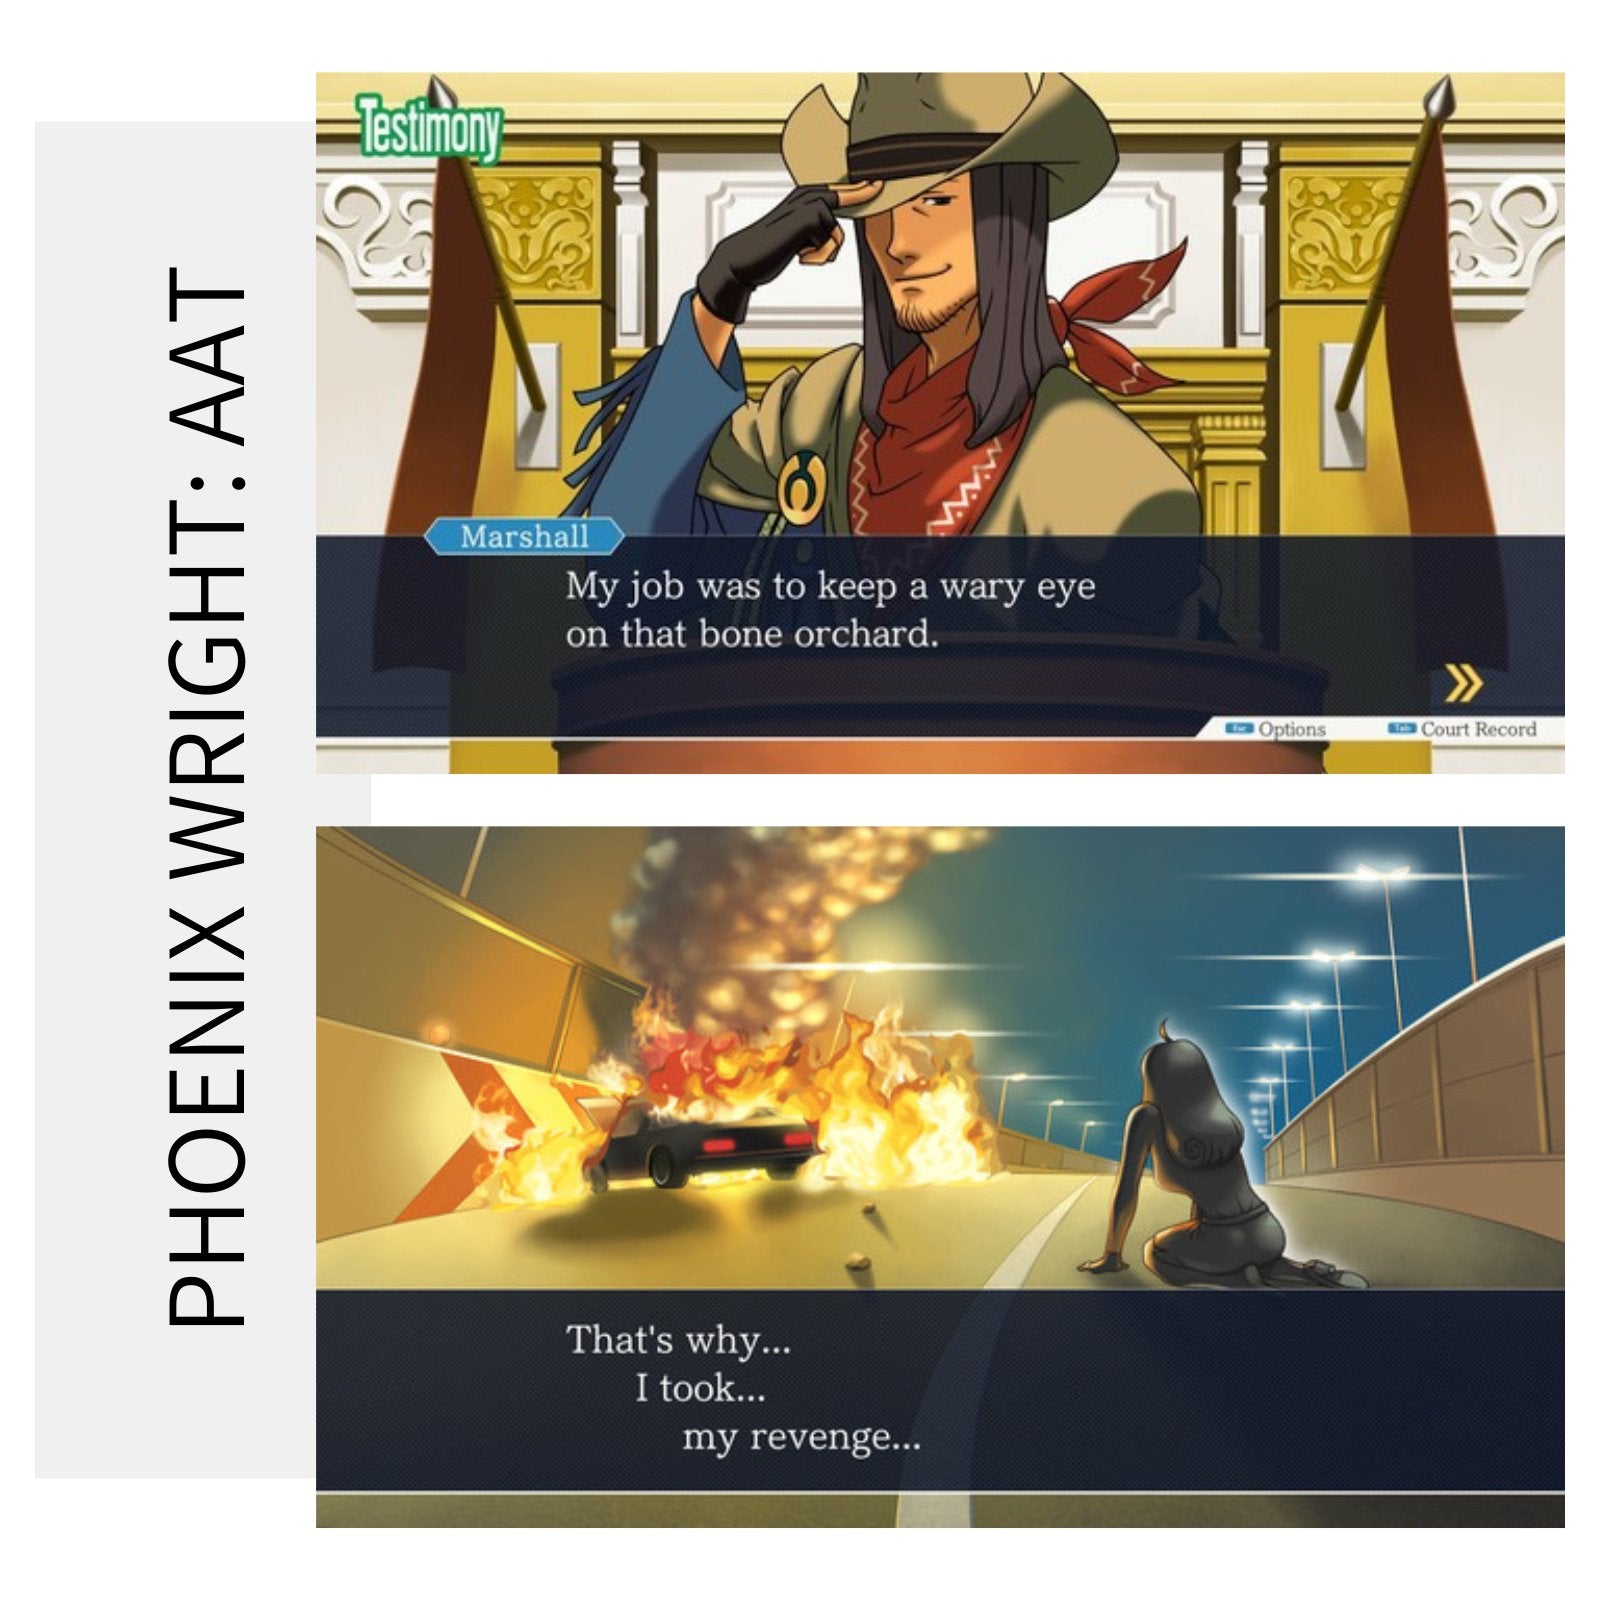 Phoenix Wright: Ace Attorney Trilogy | PC Game Steam Key - Killonyi